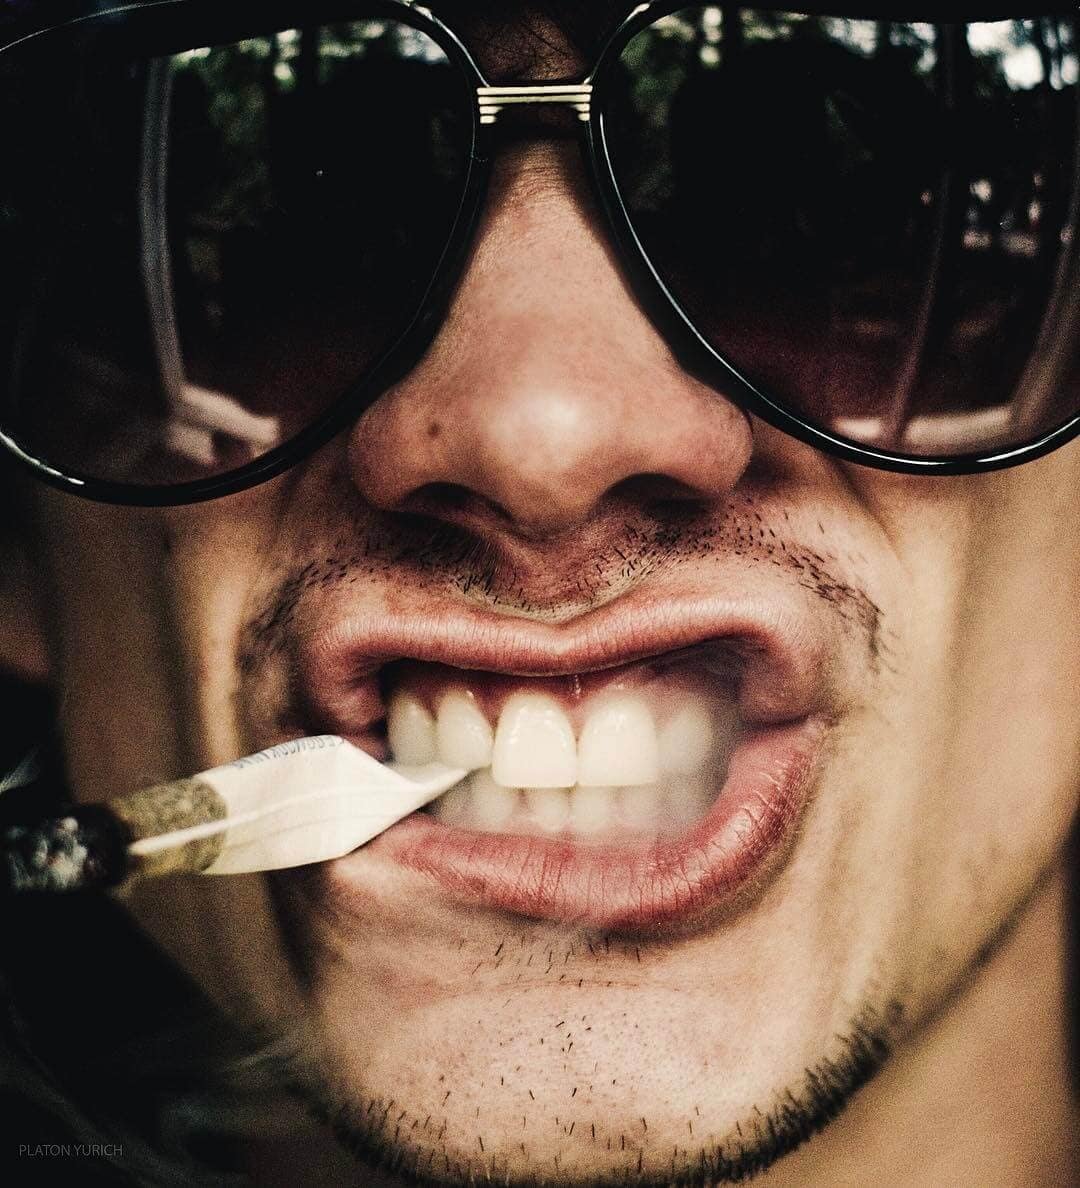 Мужчина с сигарой в зубах